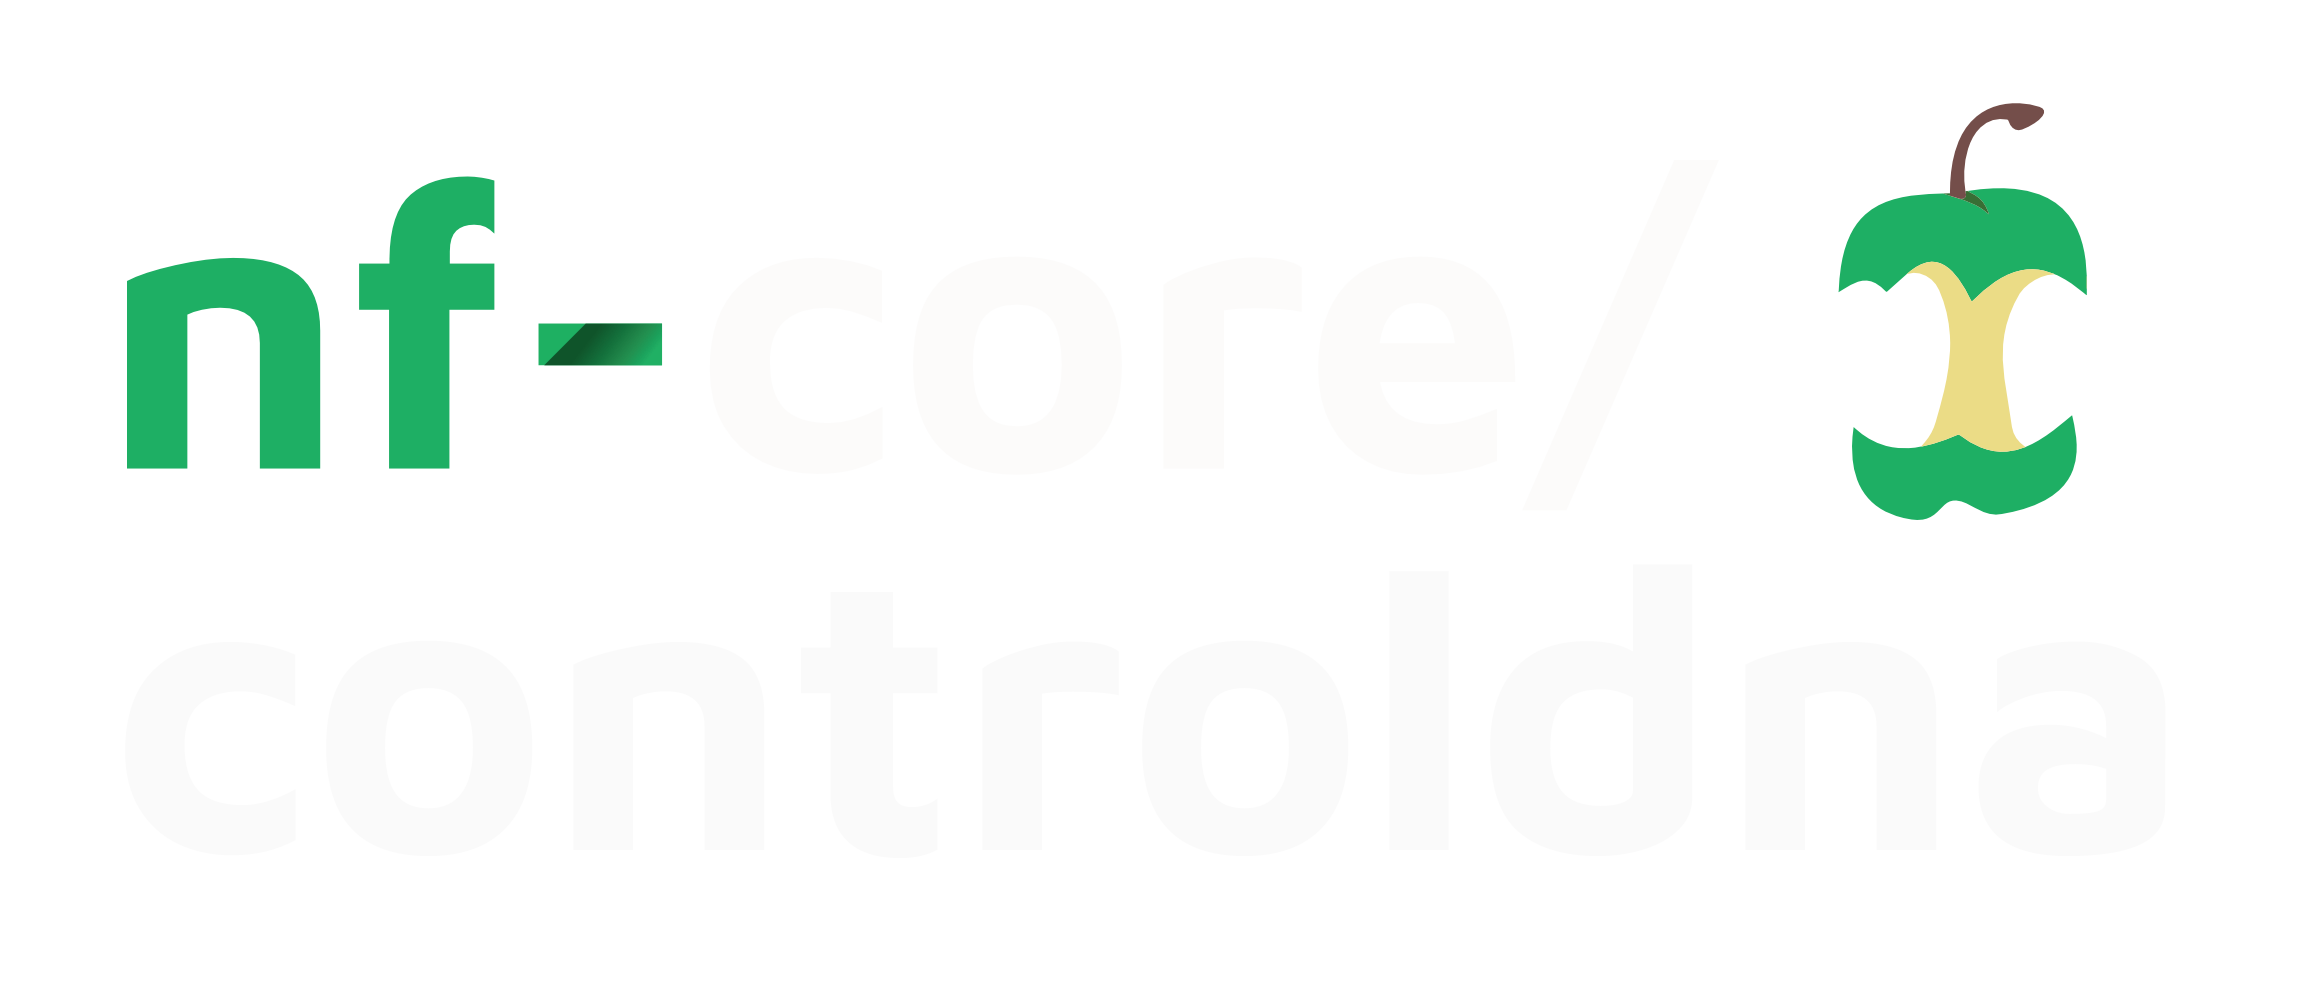 nf-core/controldna